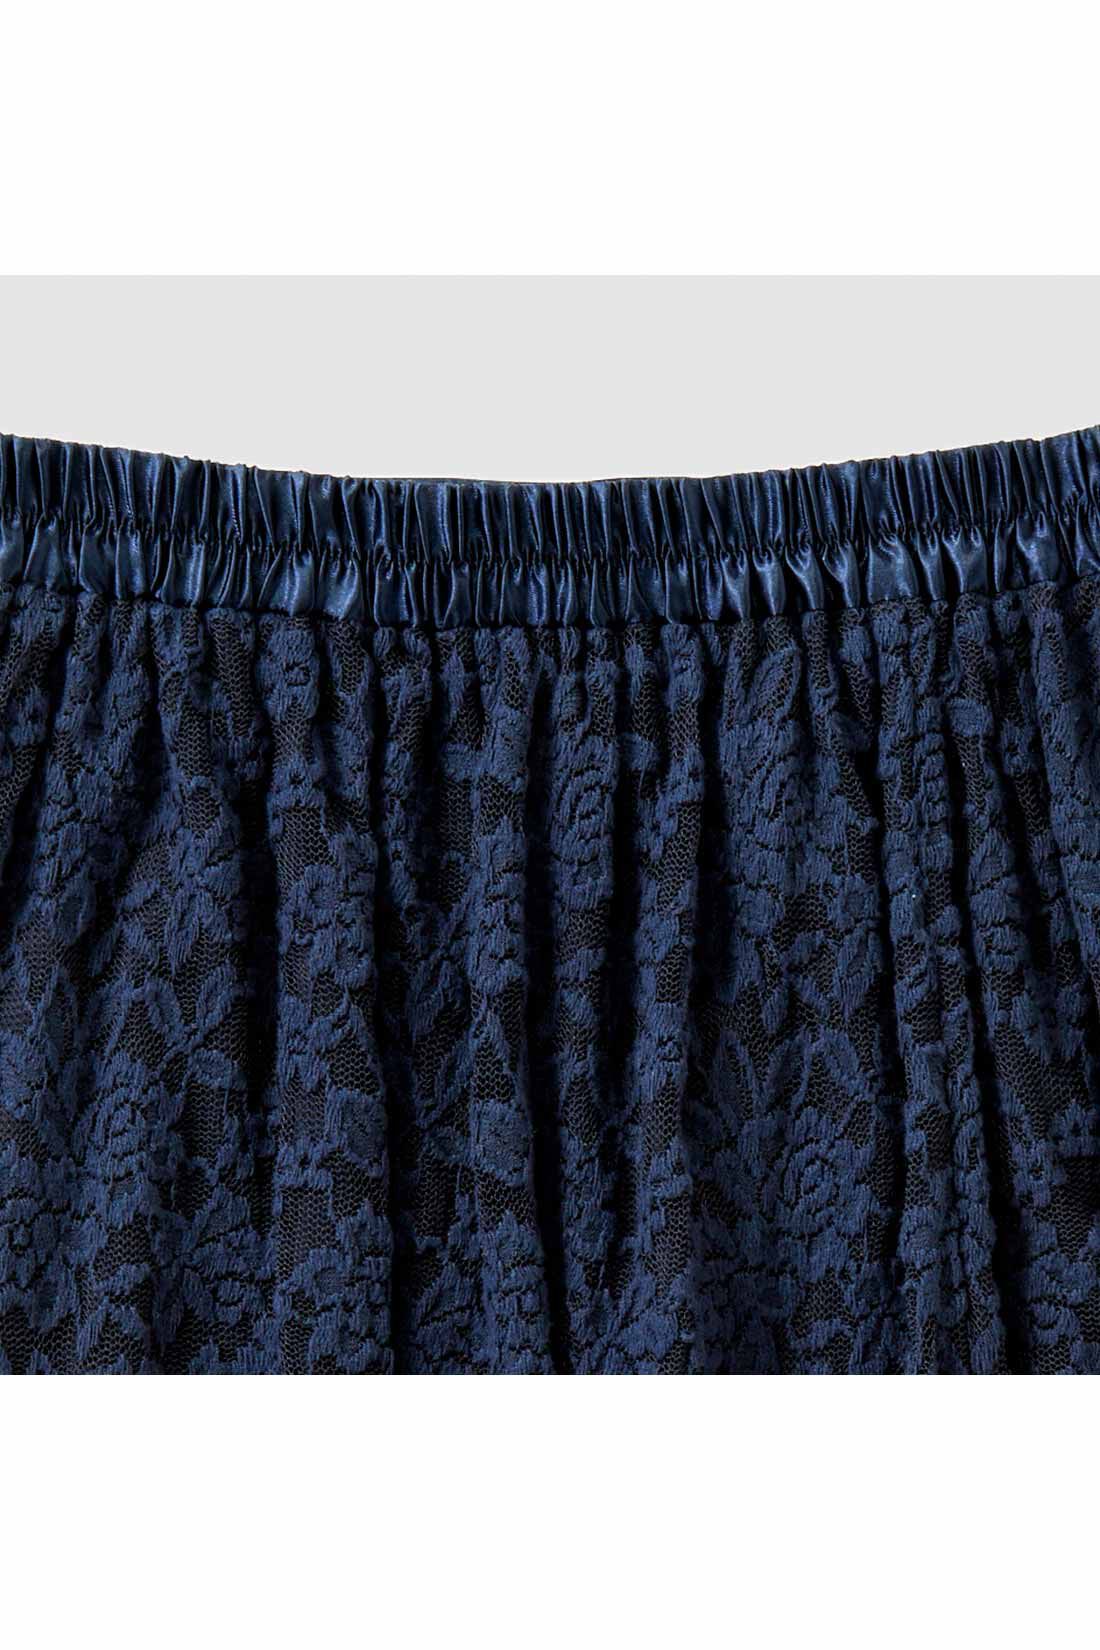 IEDIT|IEDIT[イディット]　帯電防止インナーがうれしい 起毛レーススカート〈ネイビー〉|ウエストわきから後ろゴム仕様でらくちん。